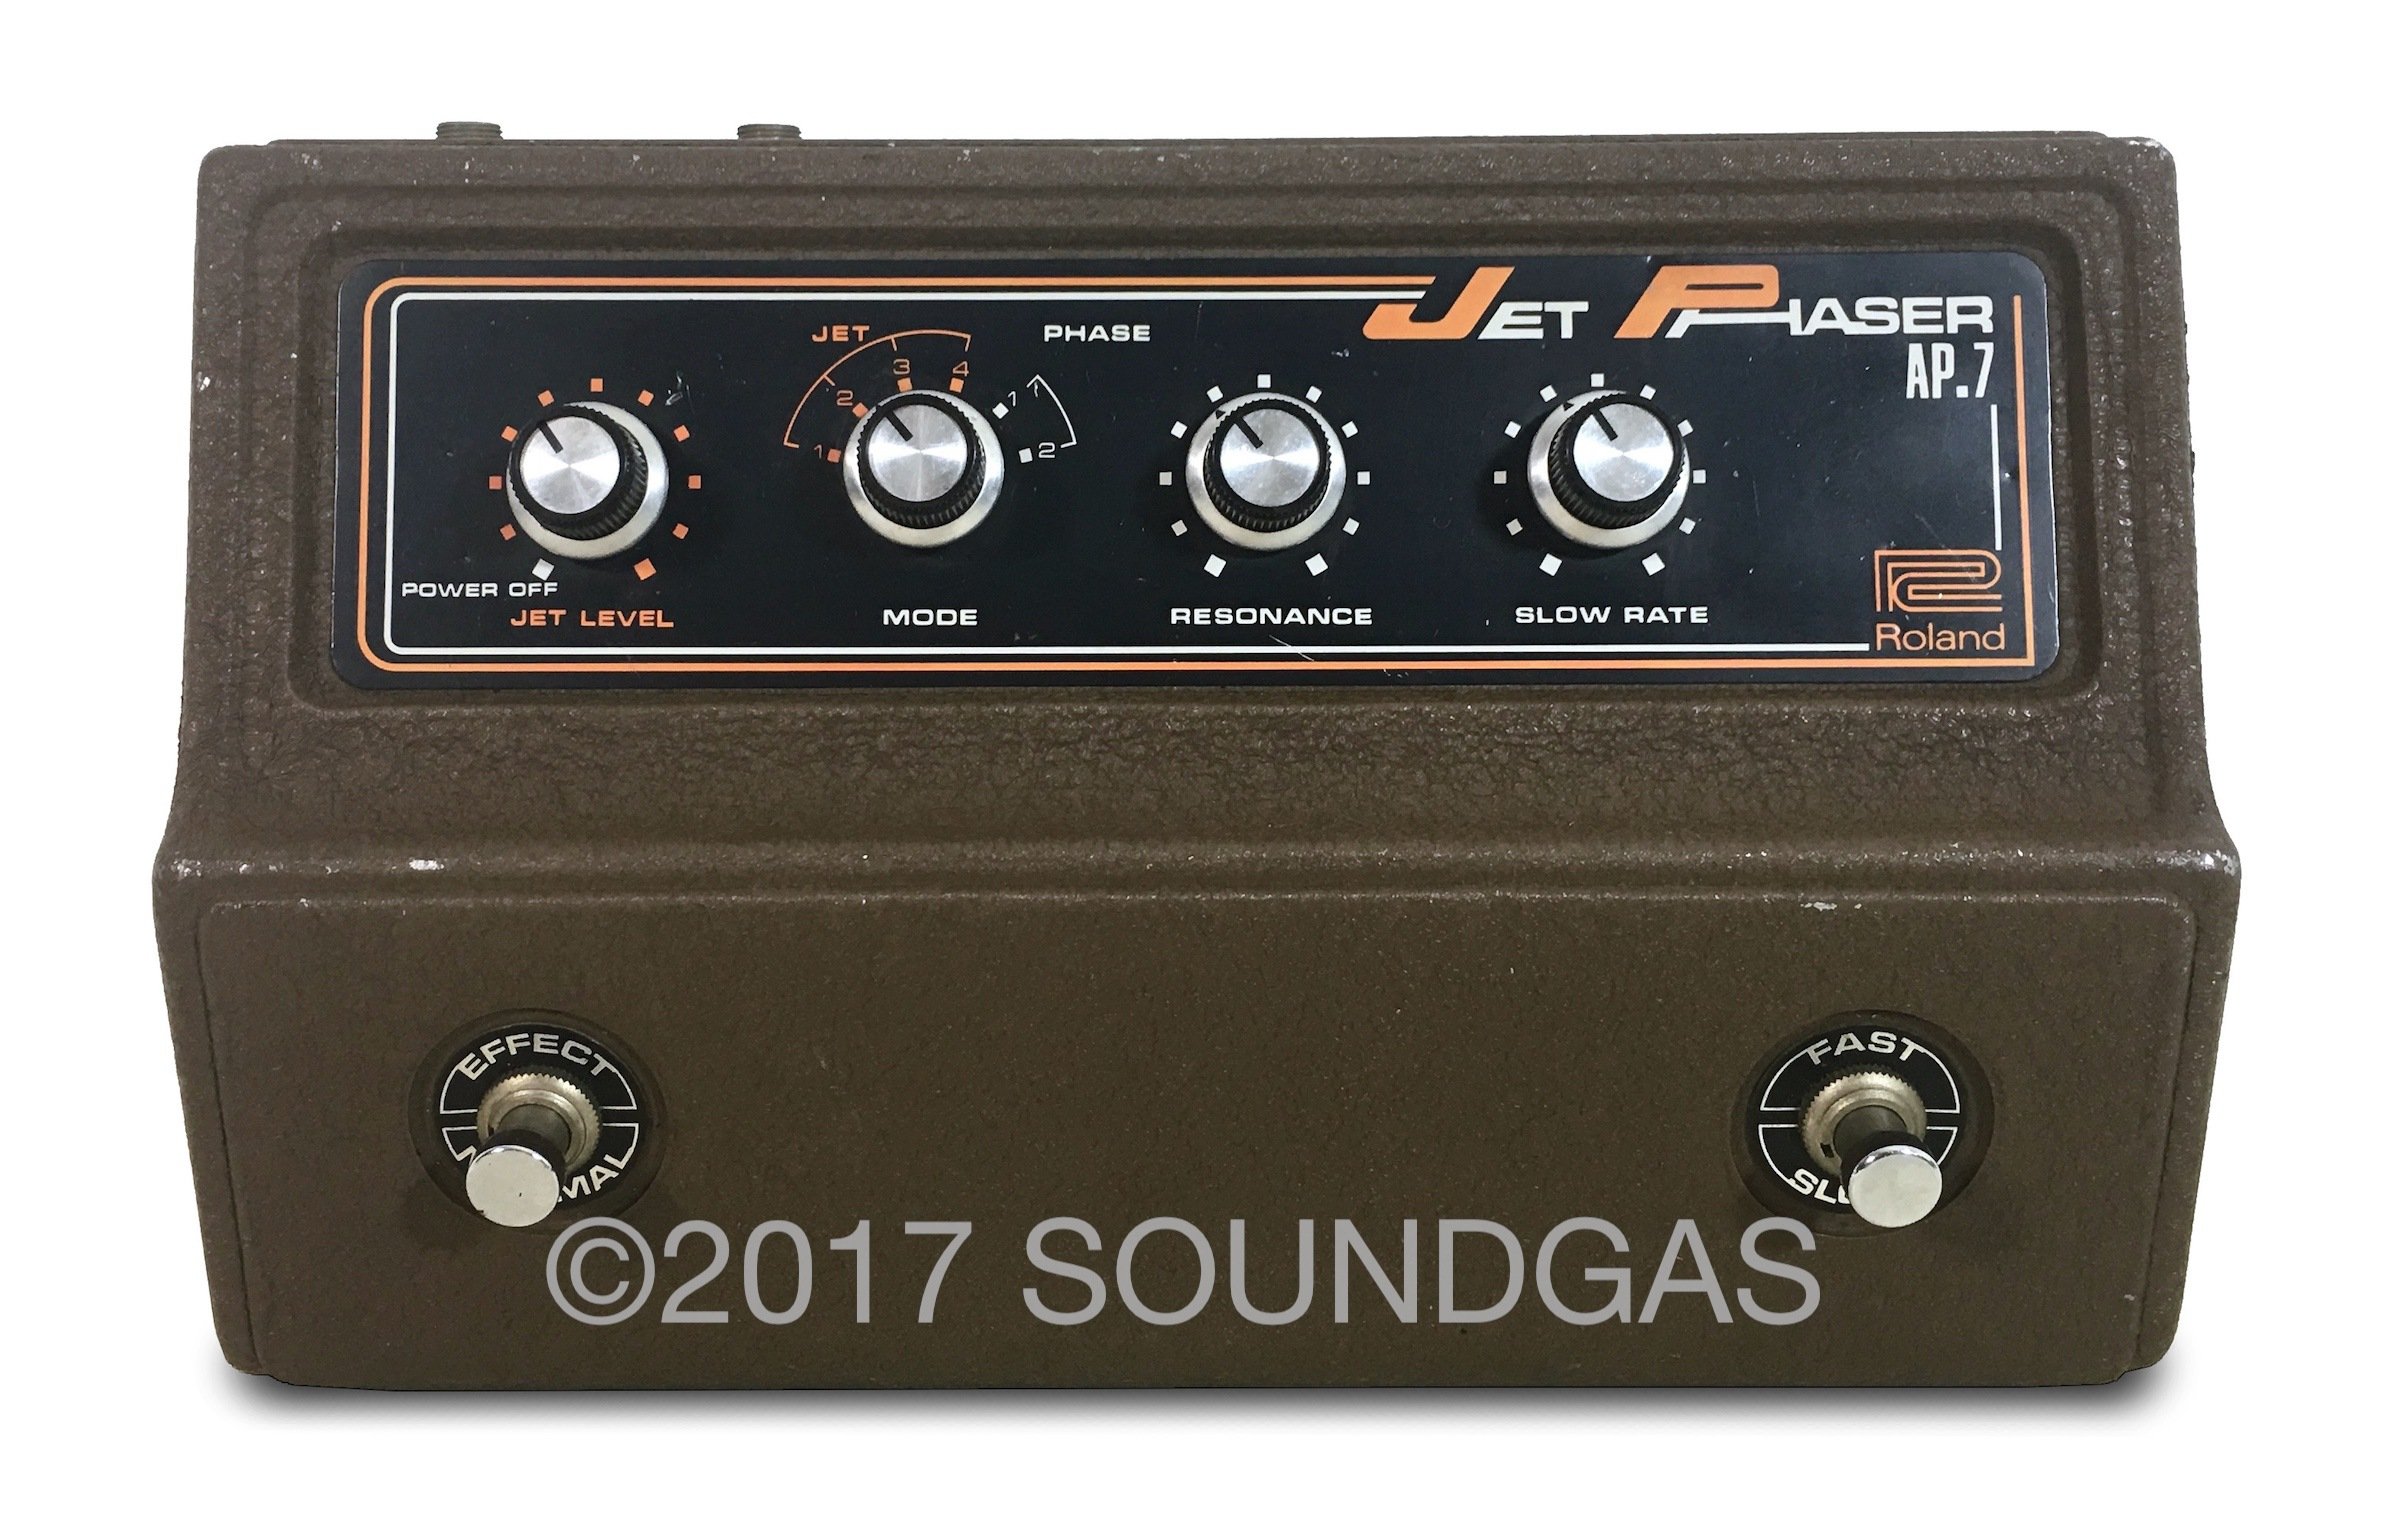 Roland Jet Phaser AP 7 1970s Effect For Sale Soundgas Ltd